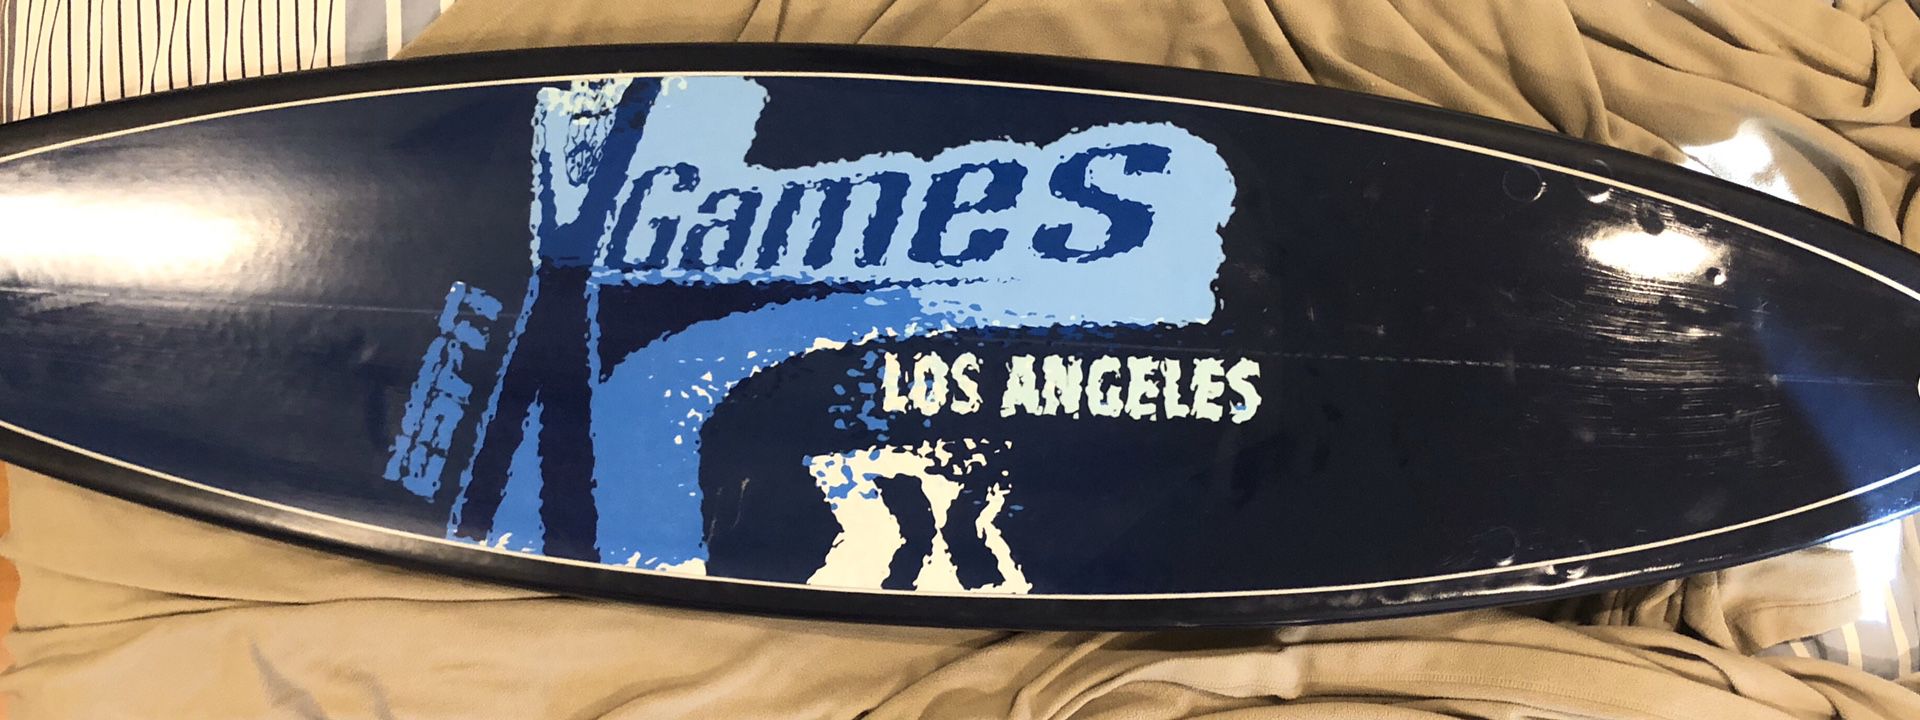 ESPN X-Games Surfboard